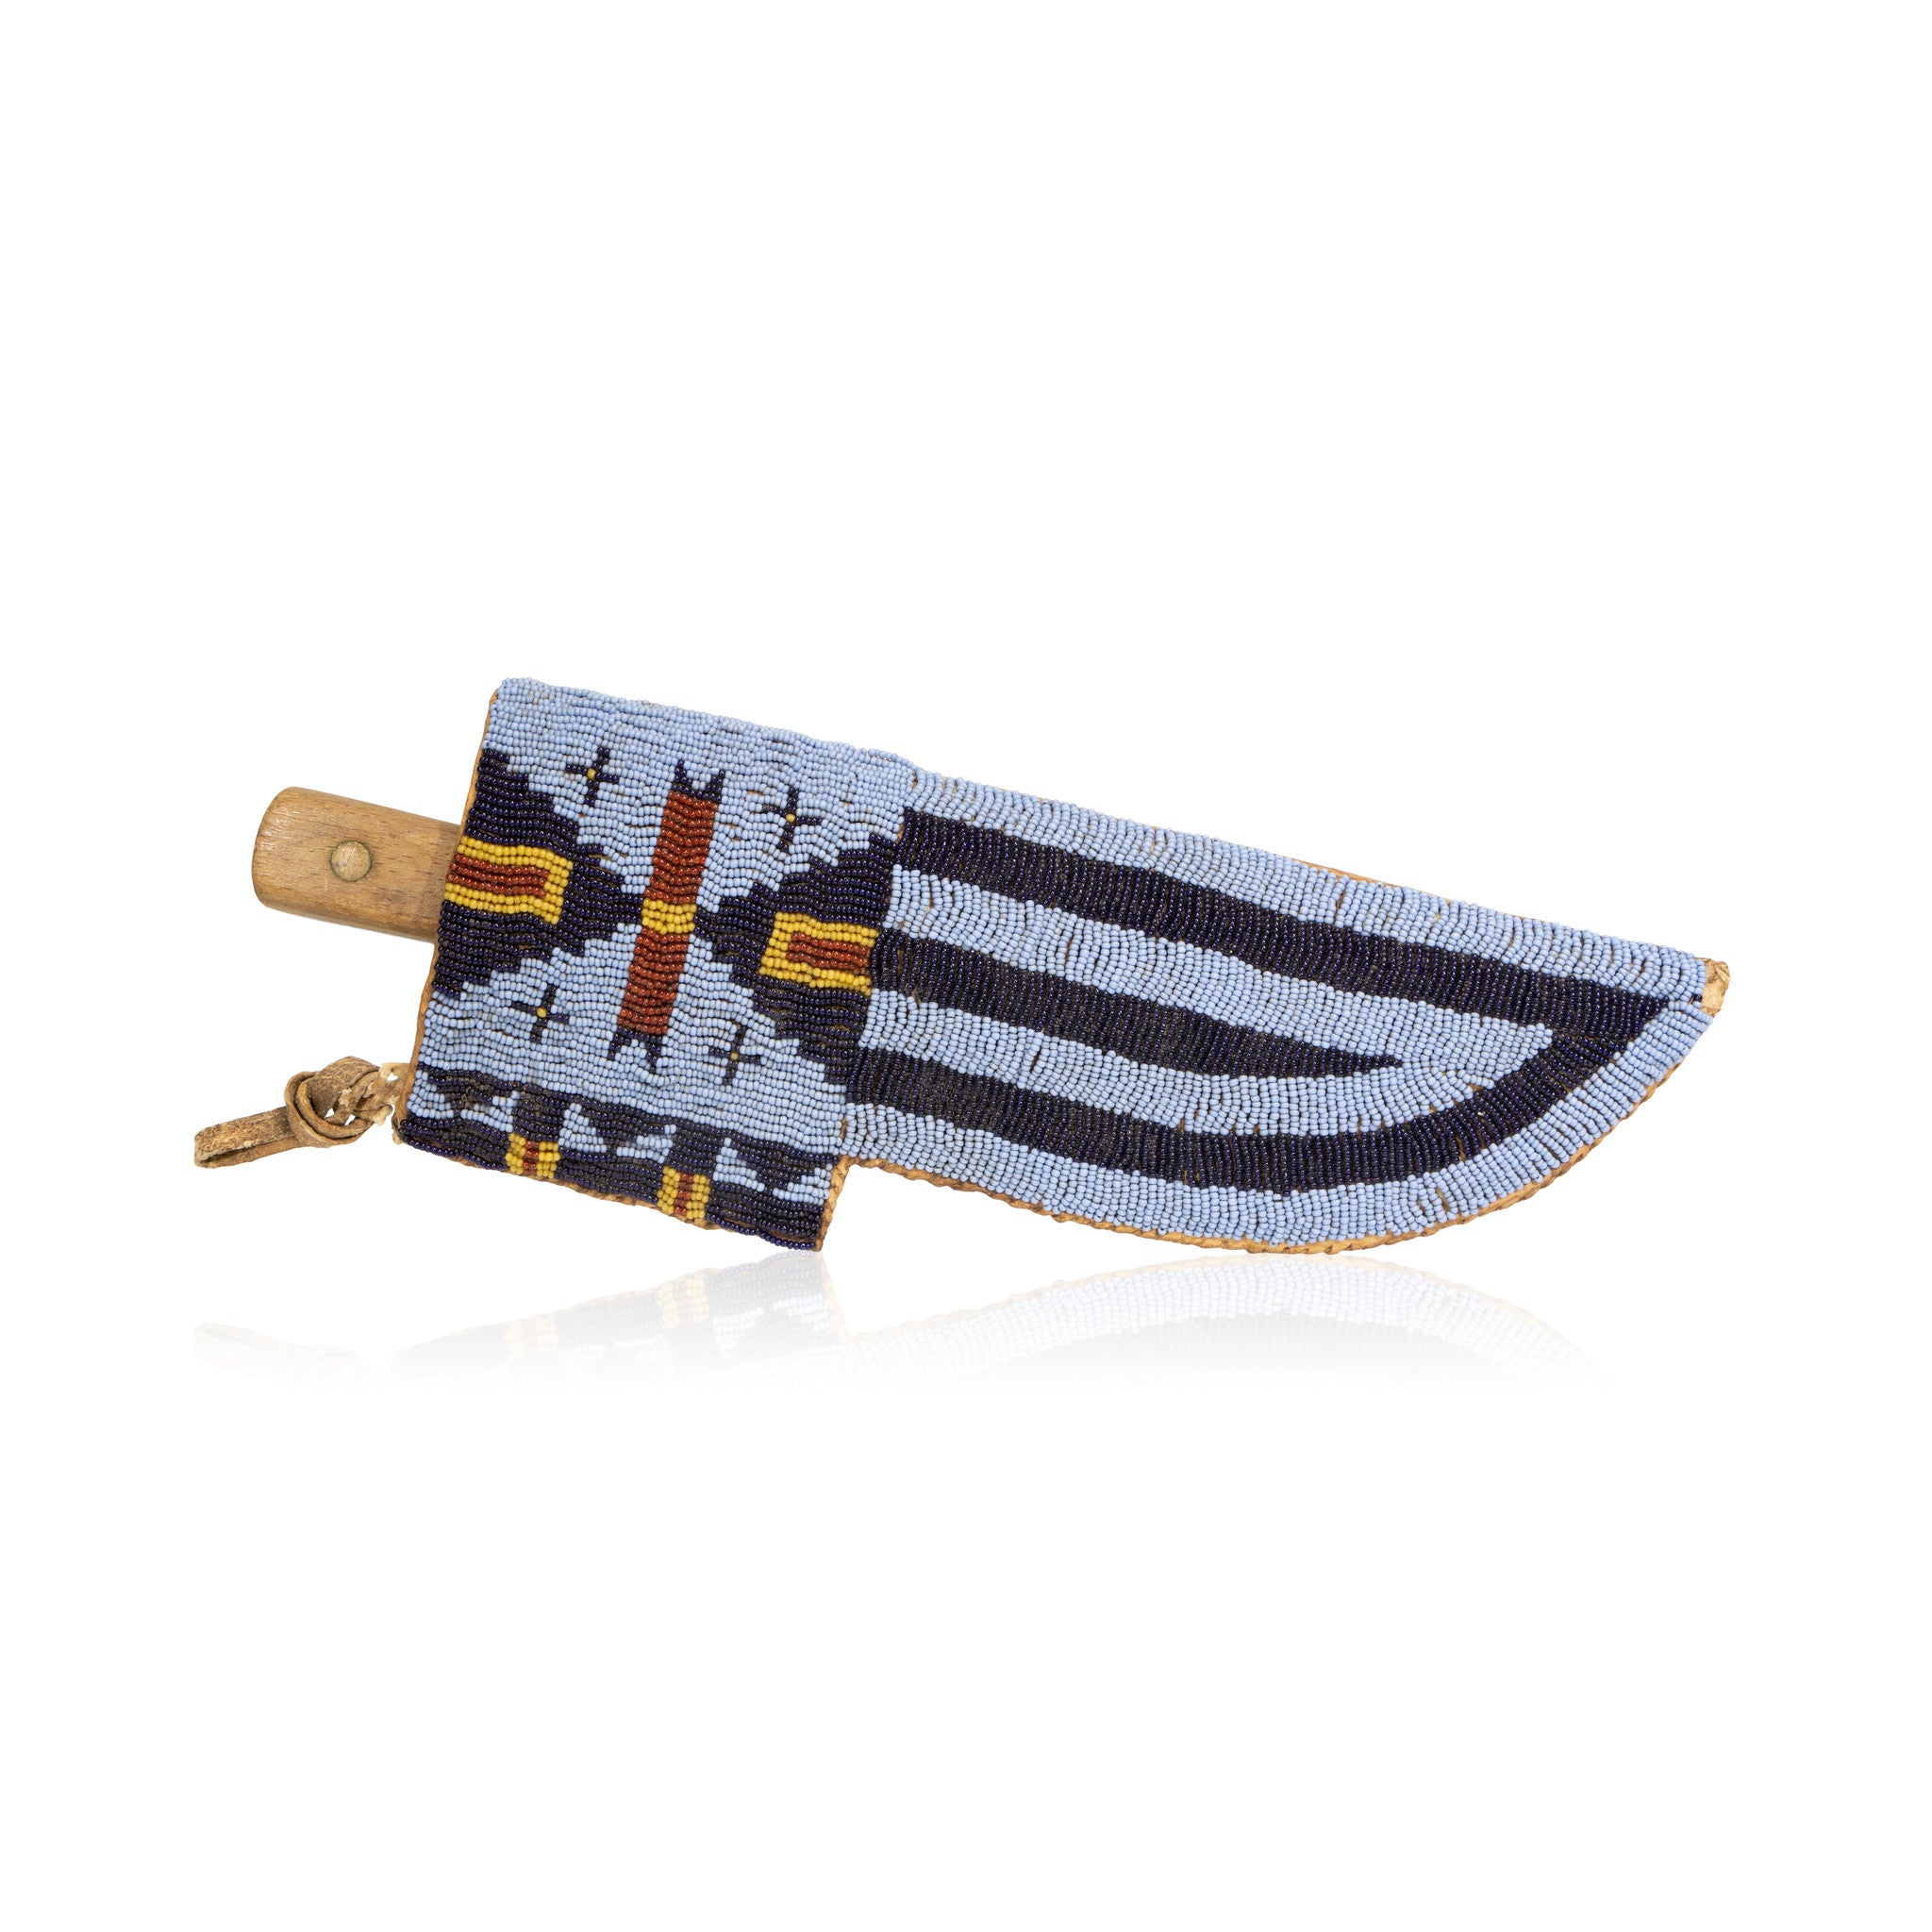 Sioux Style Beaded Knife Sheath with Trade Knife, Native, Weapon, Knife Sheath